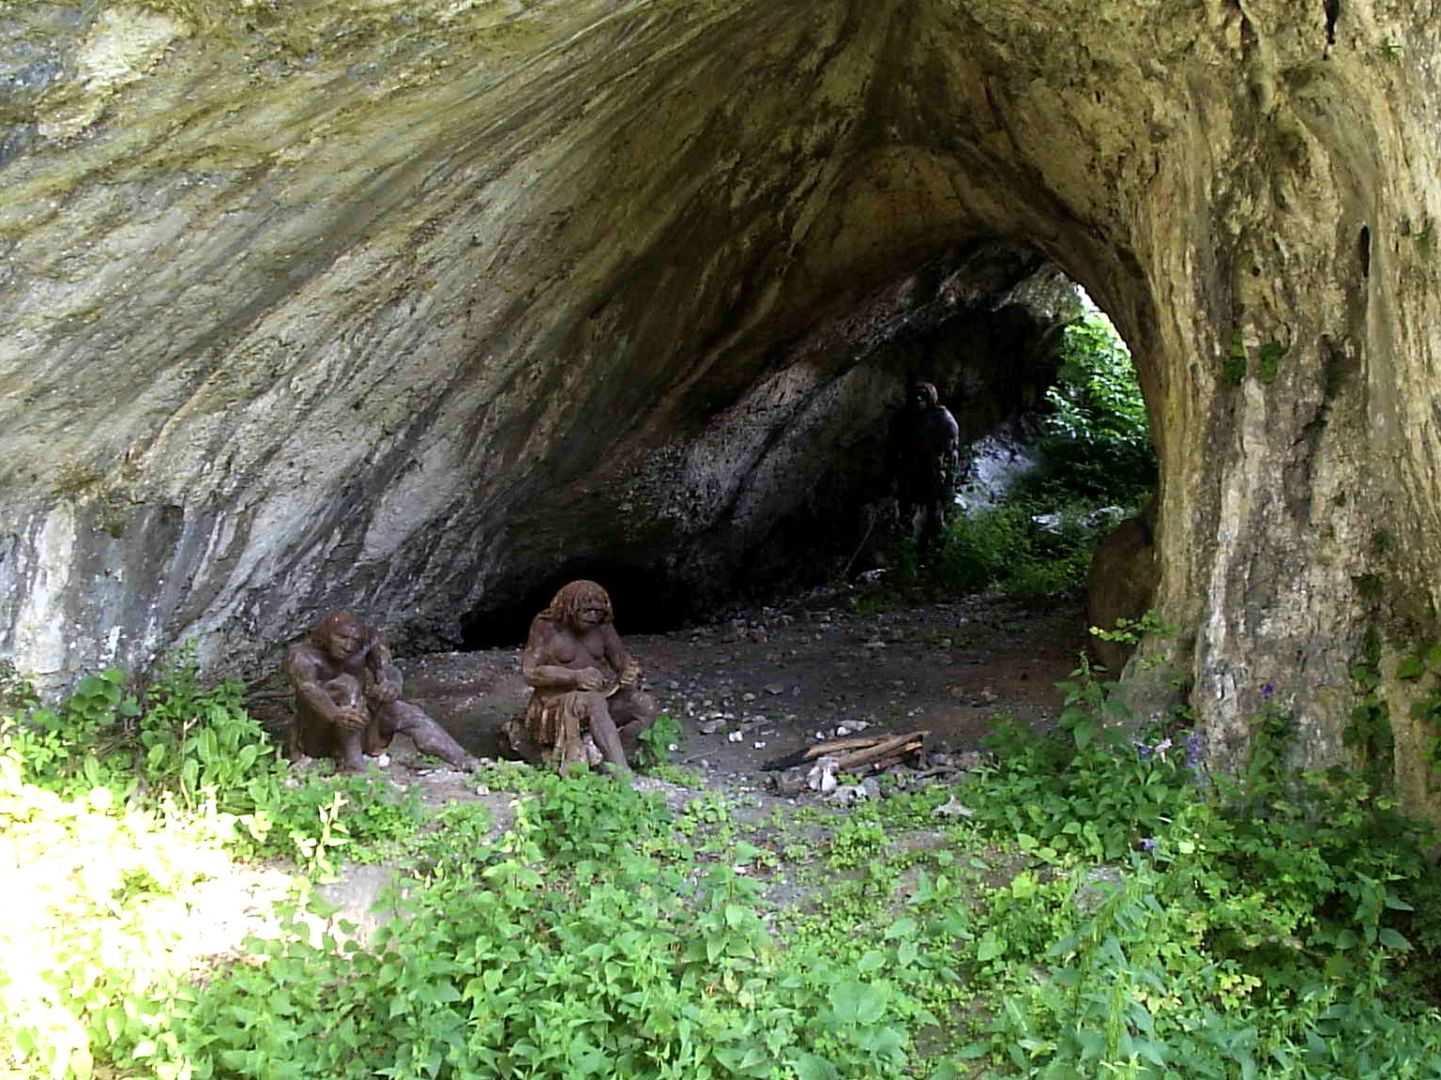 Rekonstrukcja obozowiska neandertalczyków